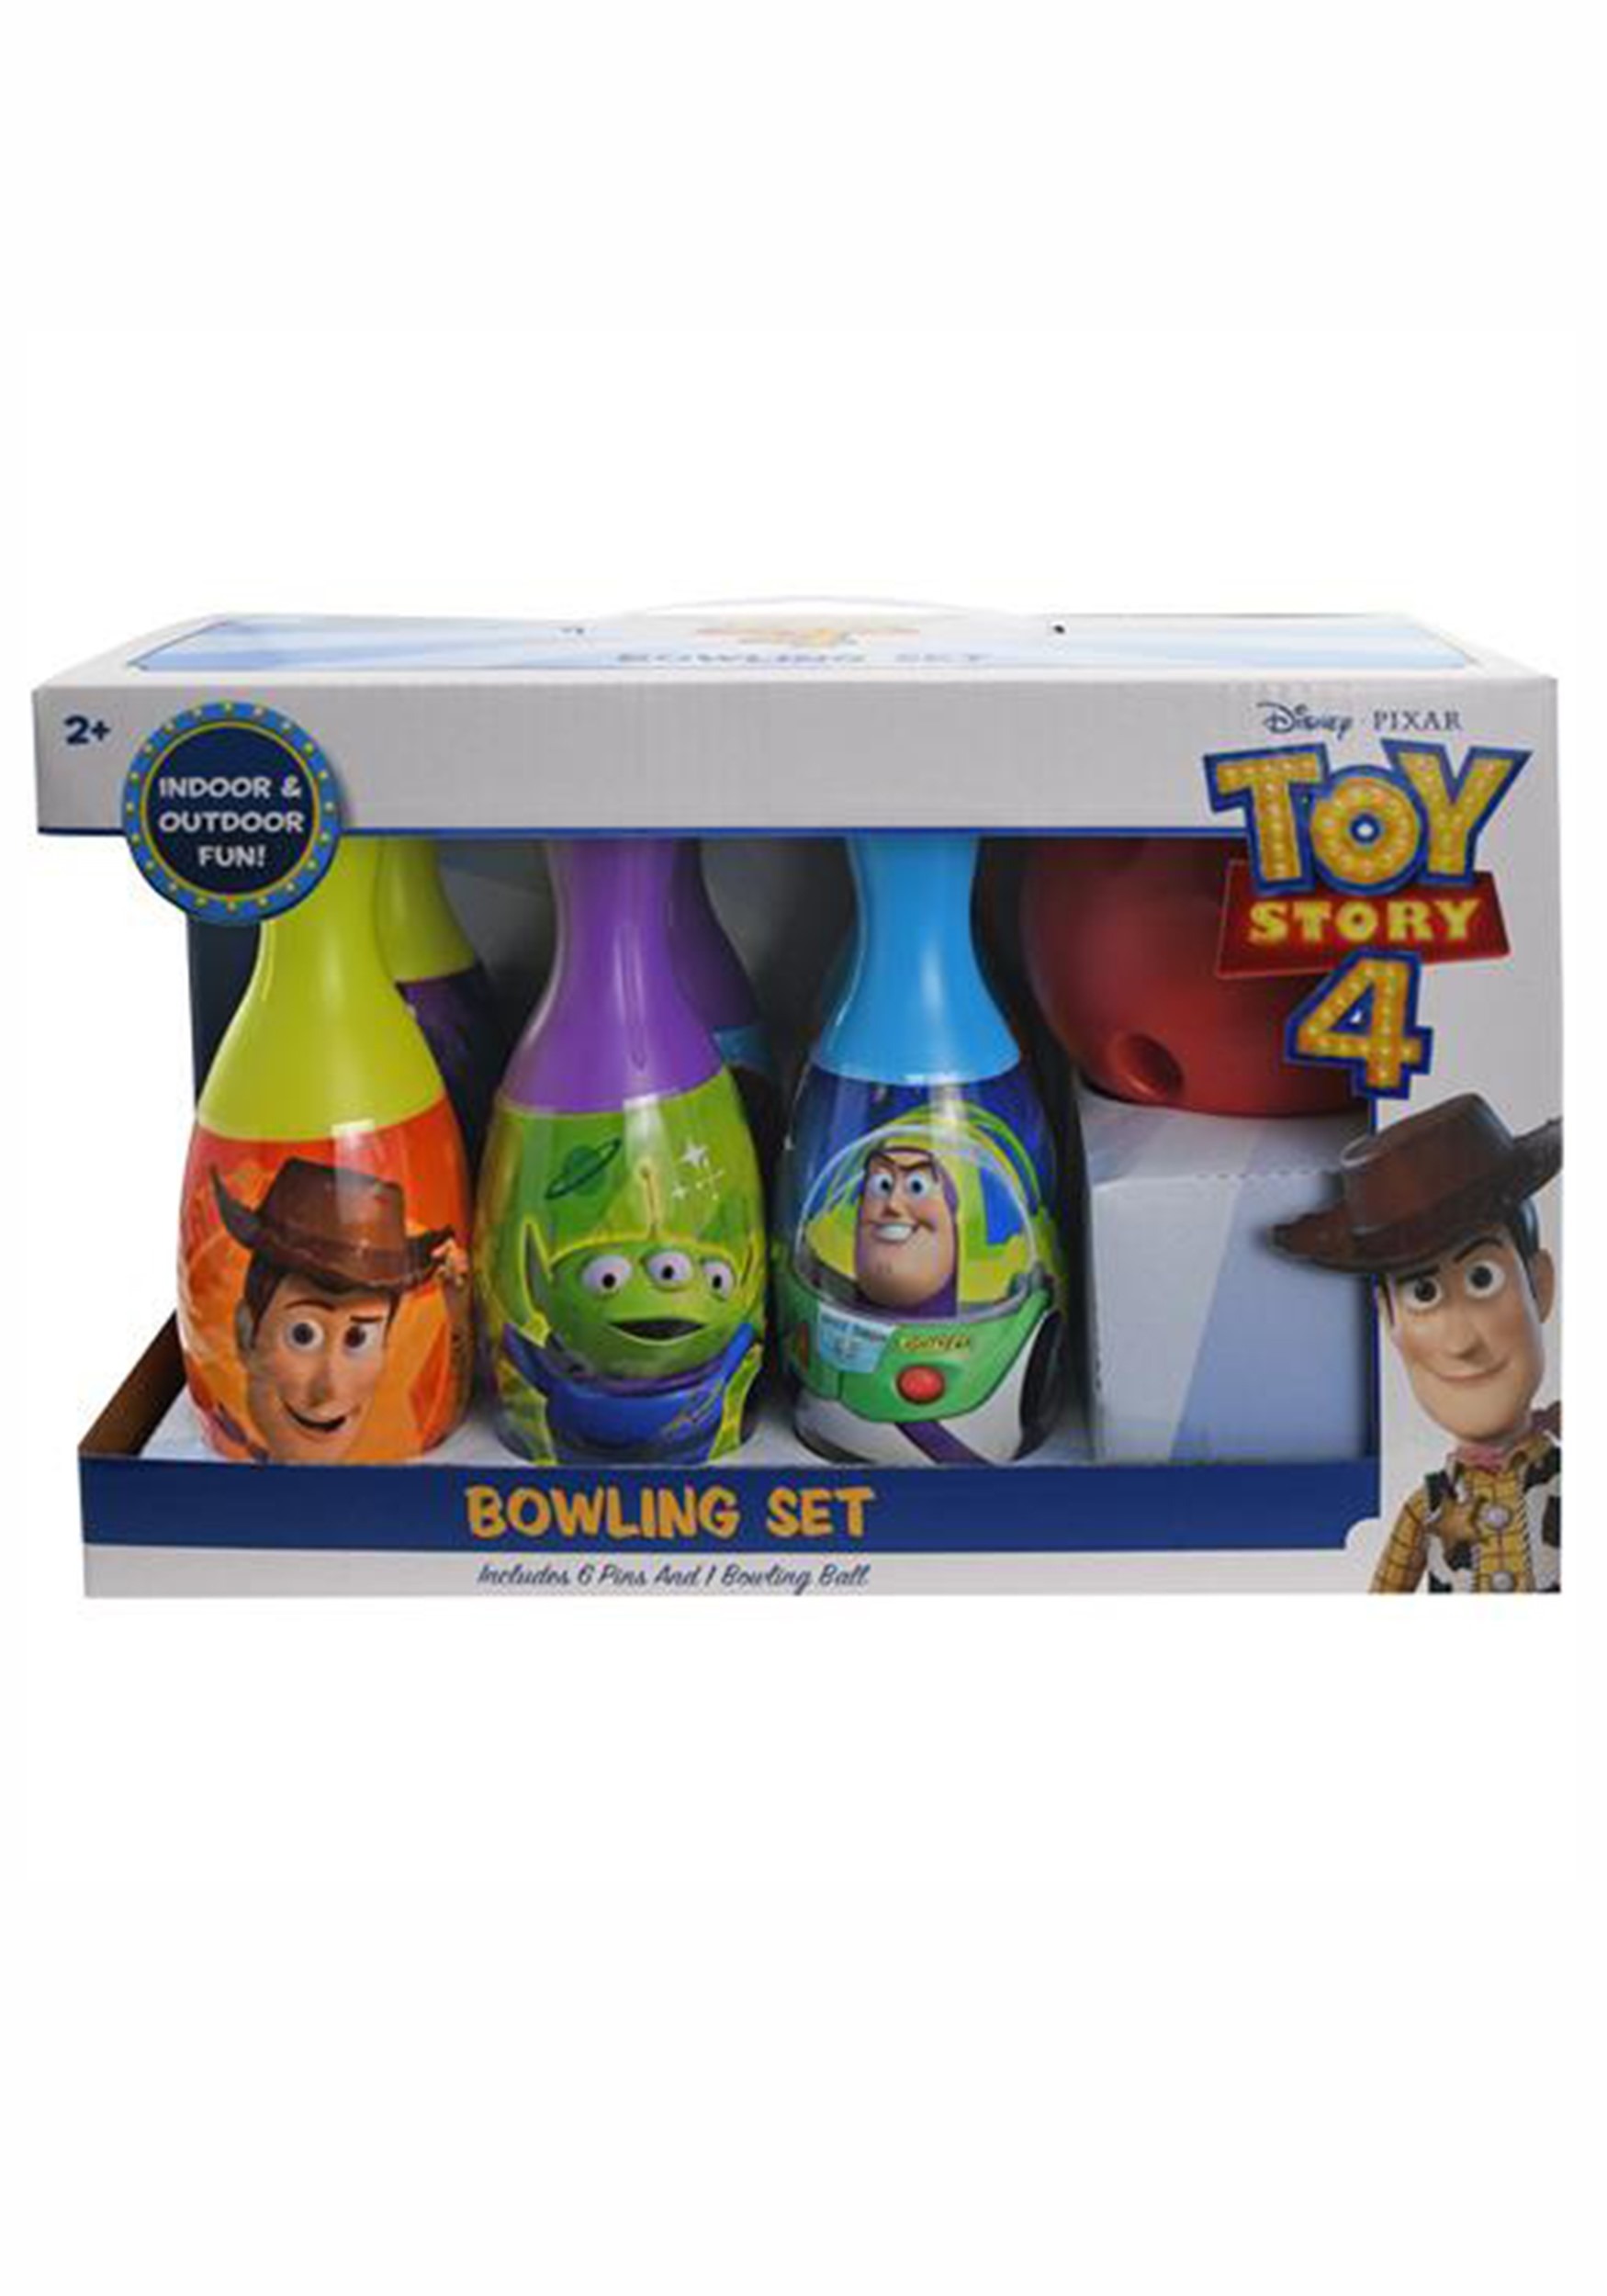 Bowling Set Toy Story 4